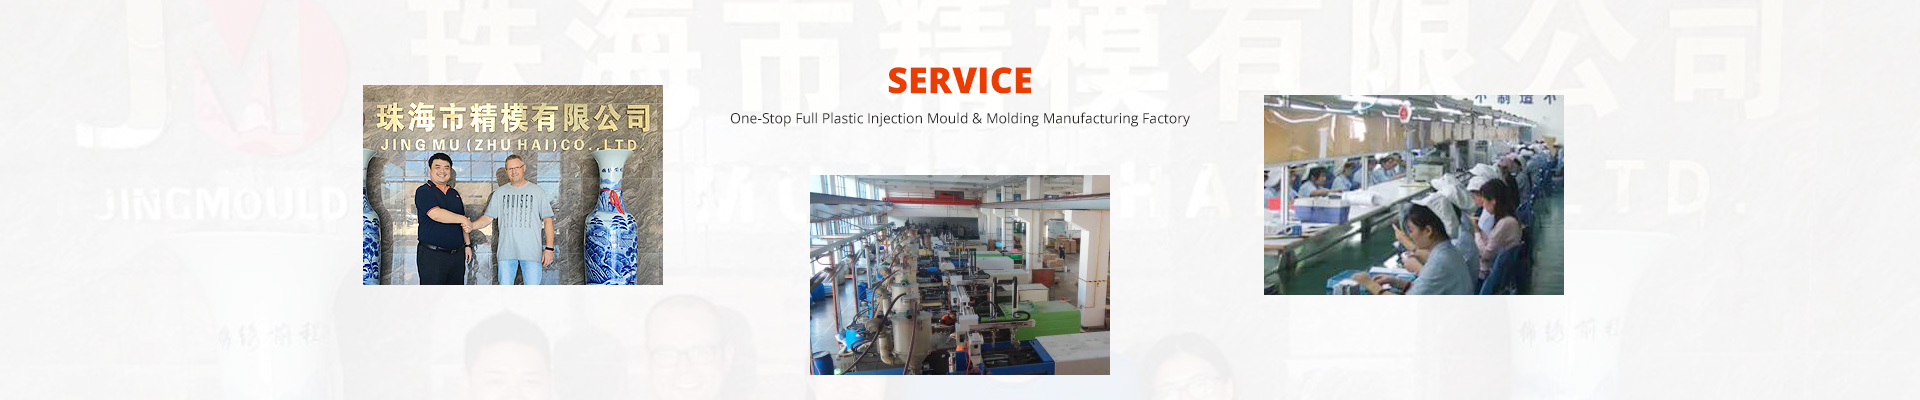 Custom Manufacturing Decorating Services